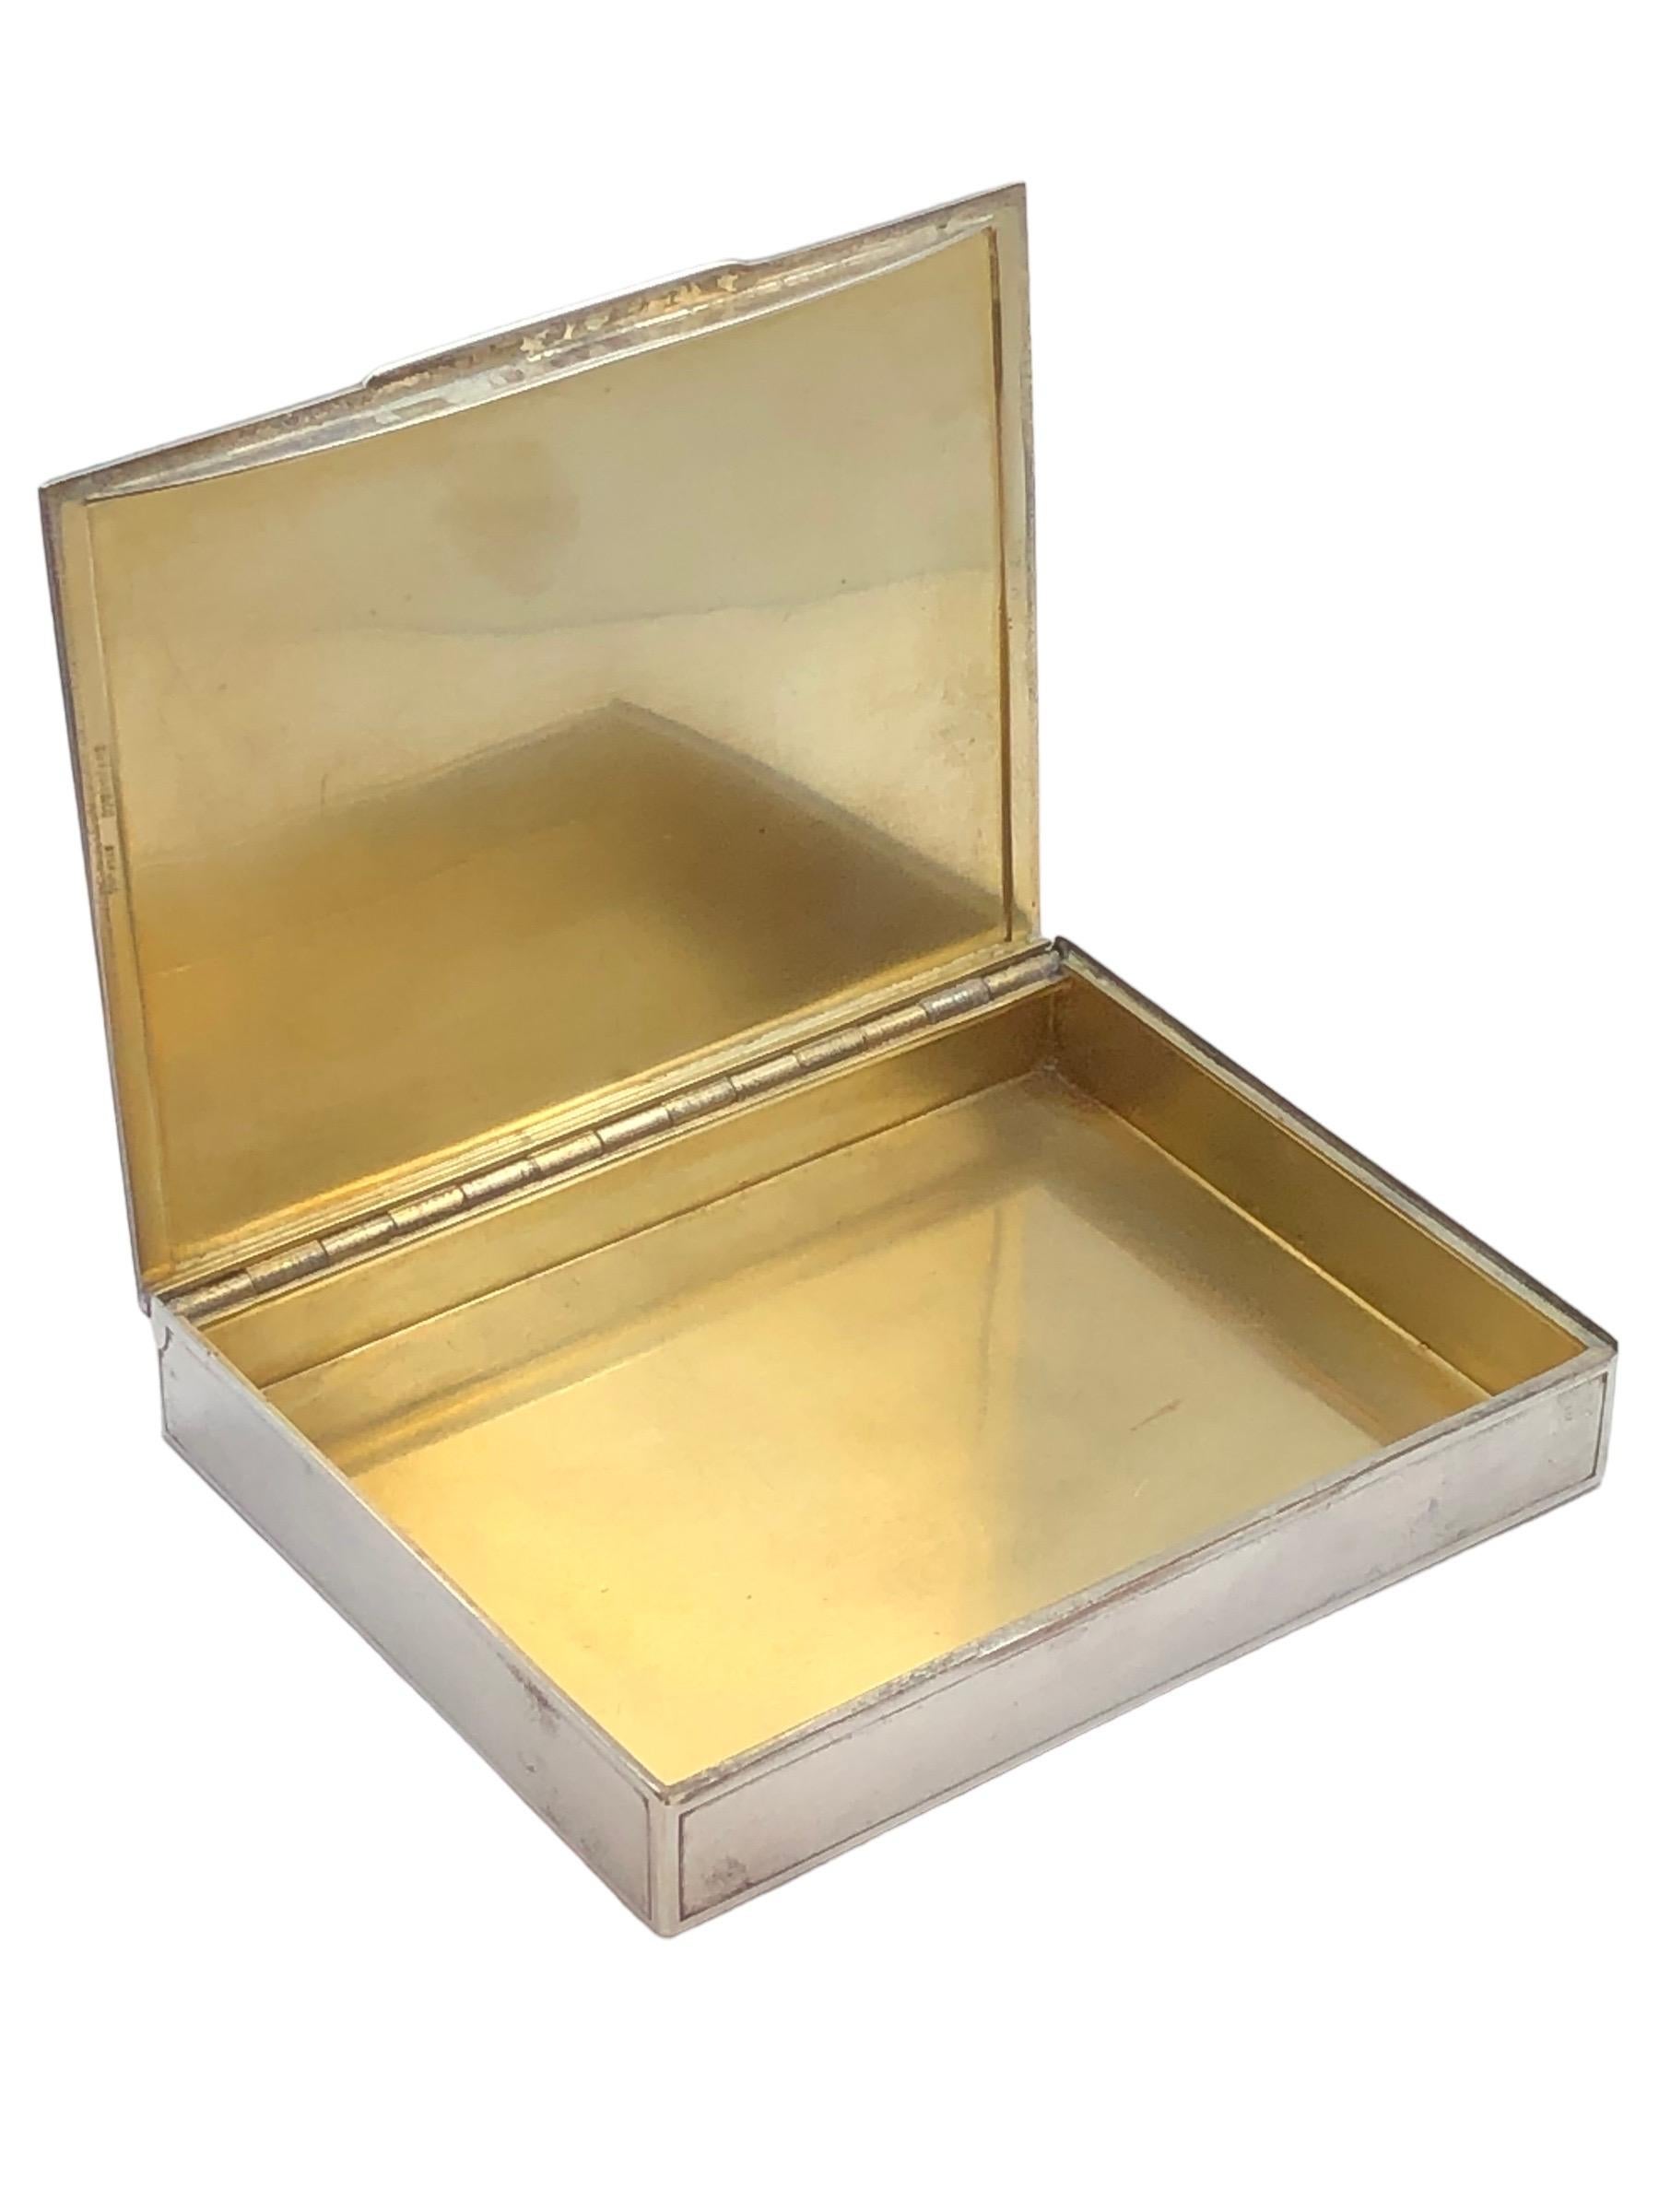 Circa 1920s Tiffany & Company Sterling Silver Table Trinket Box, measuring 3 5/8  X  2 7/8 inches x 1/2 inch deep, Gold wash interior. 